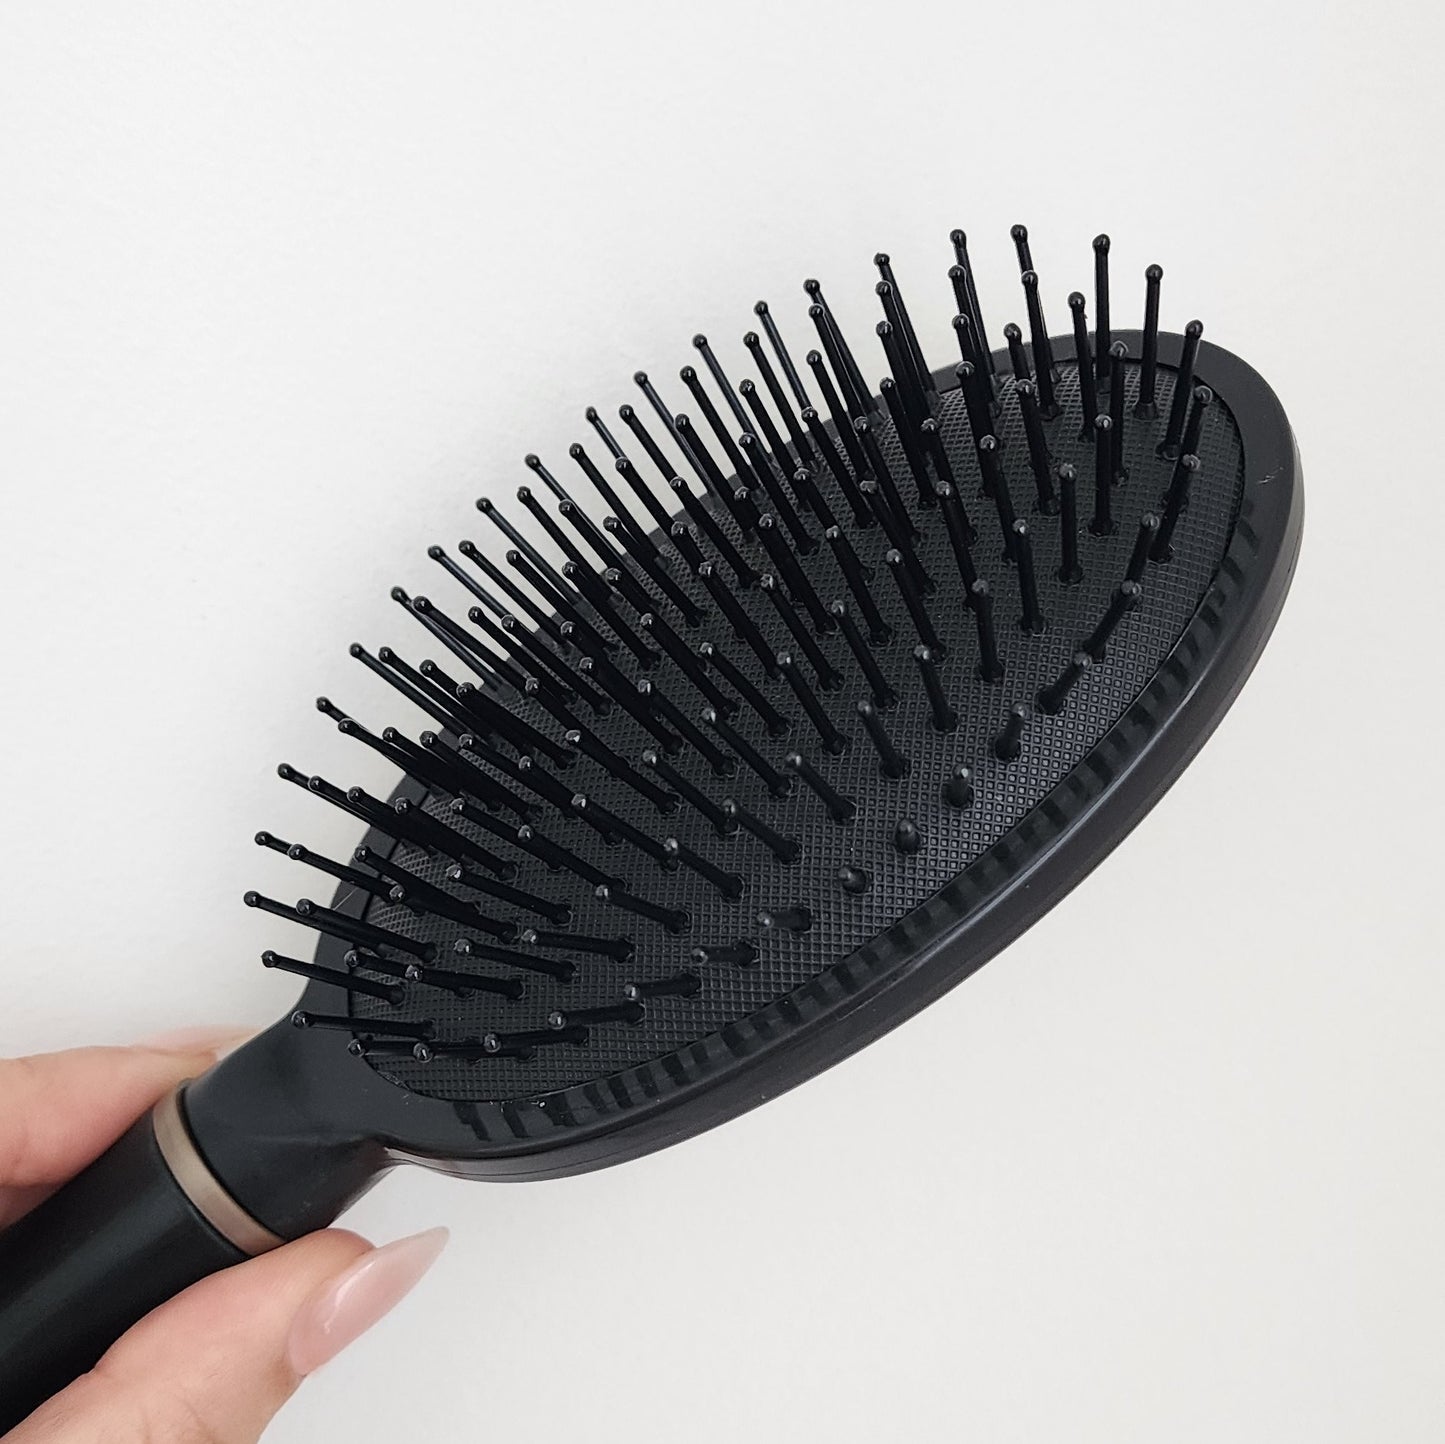 Anti-static Hair Extension Brush